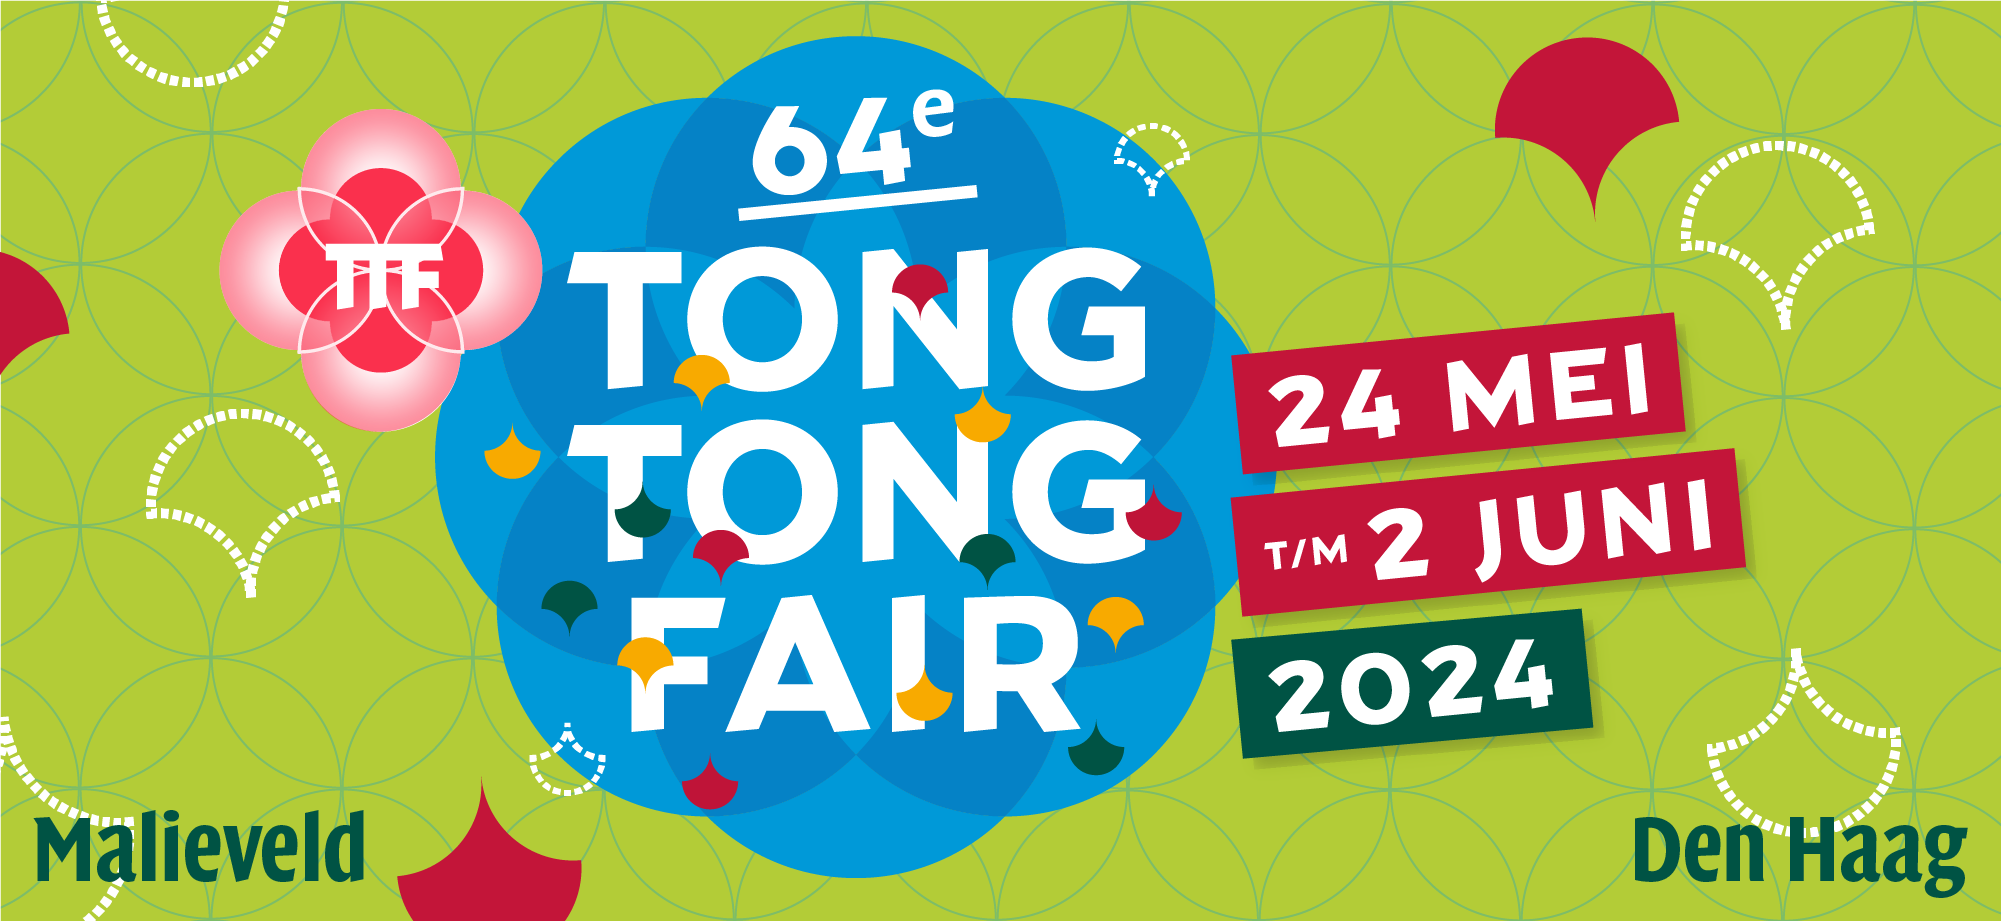 64e Tong Tong Fair - van 24 mei t/m 2 juni 2024 op het Malieveld in Den Haag